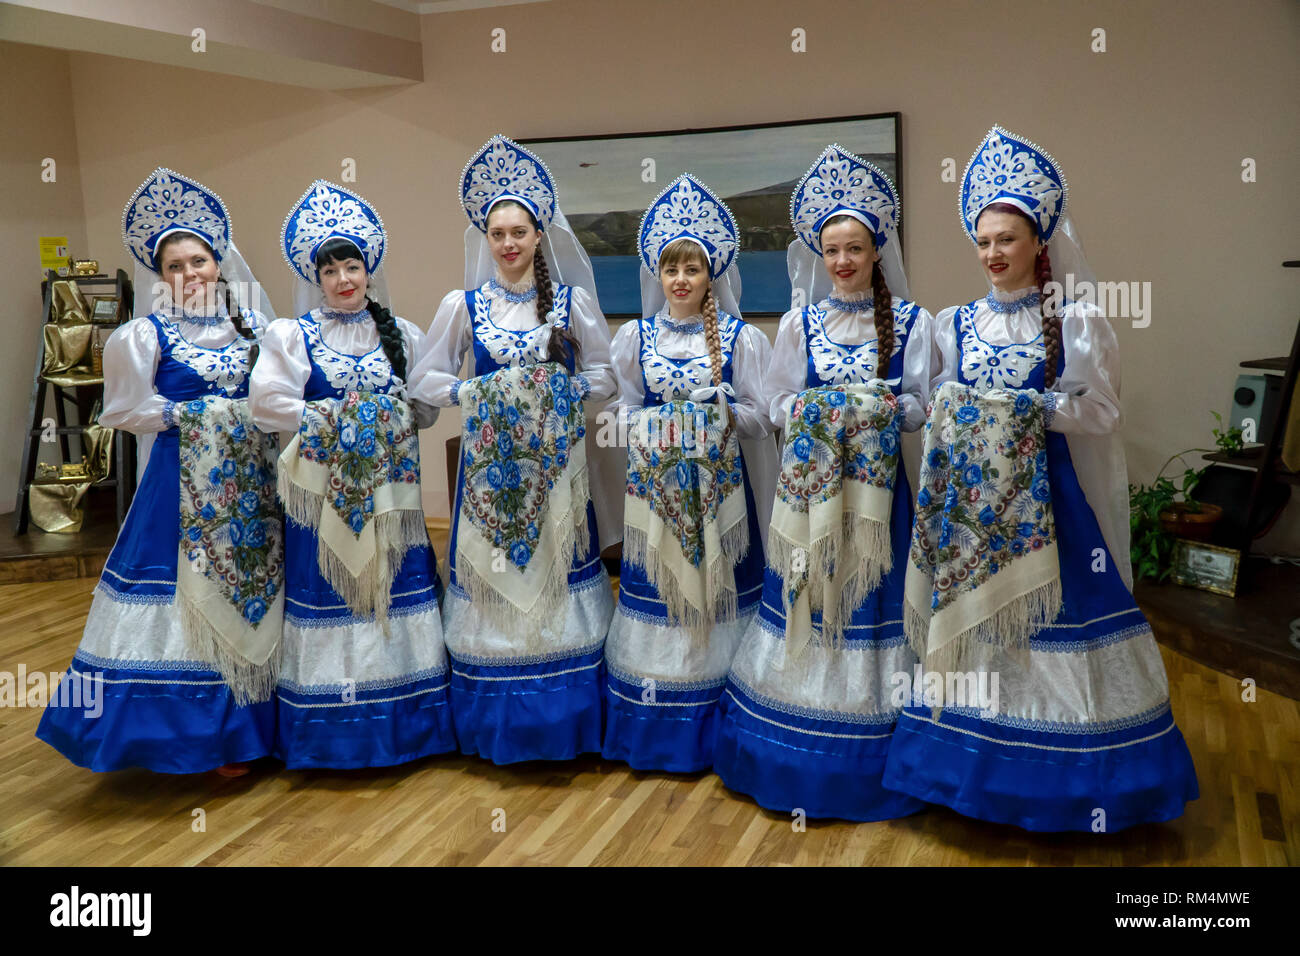 Russian women in traditional costumes in Barentsburg, a Russian coal mining settlement in Billefjorden, Spitsbergen, Norway Stock Photo